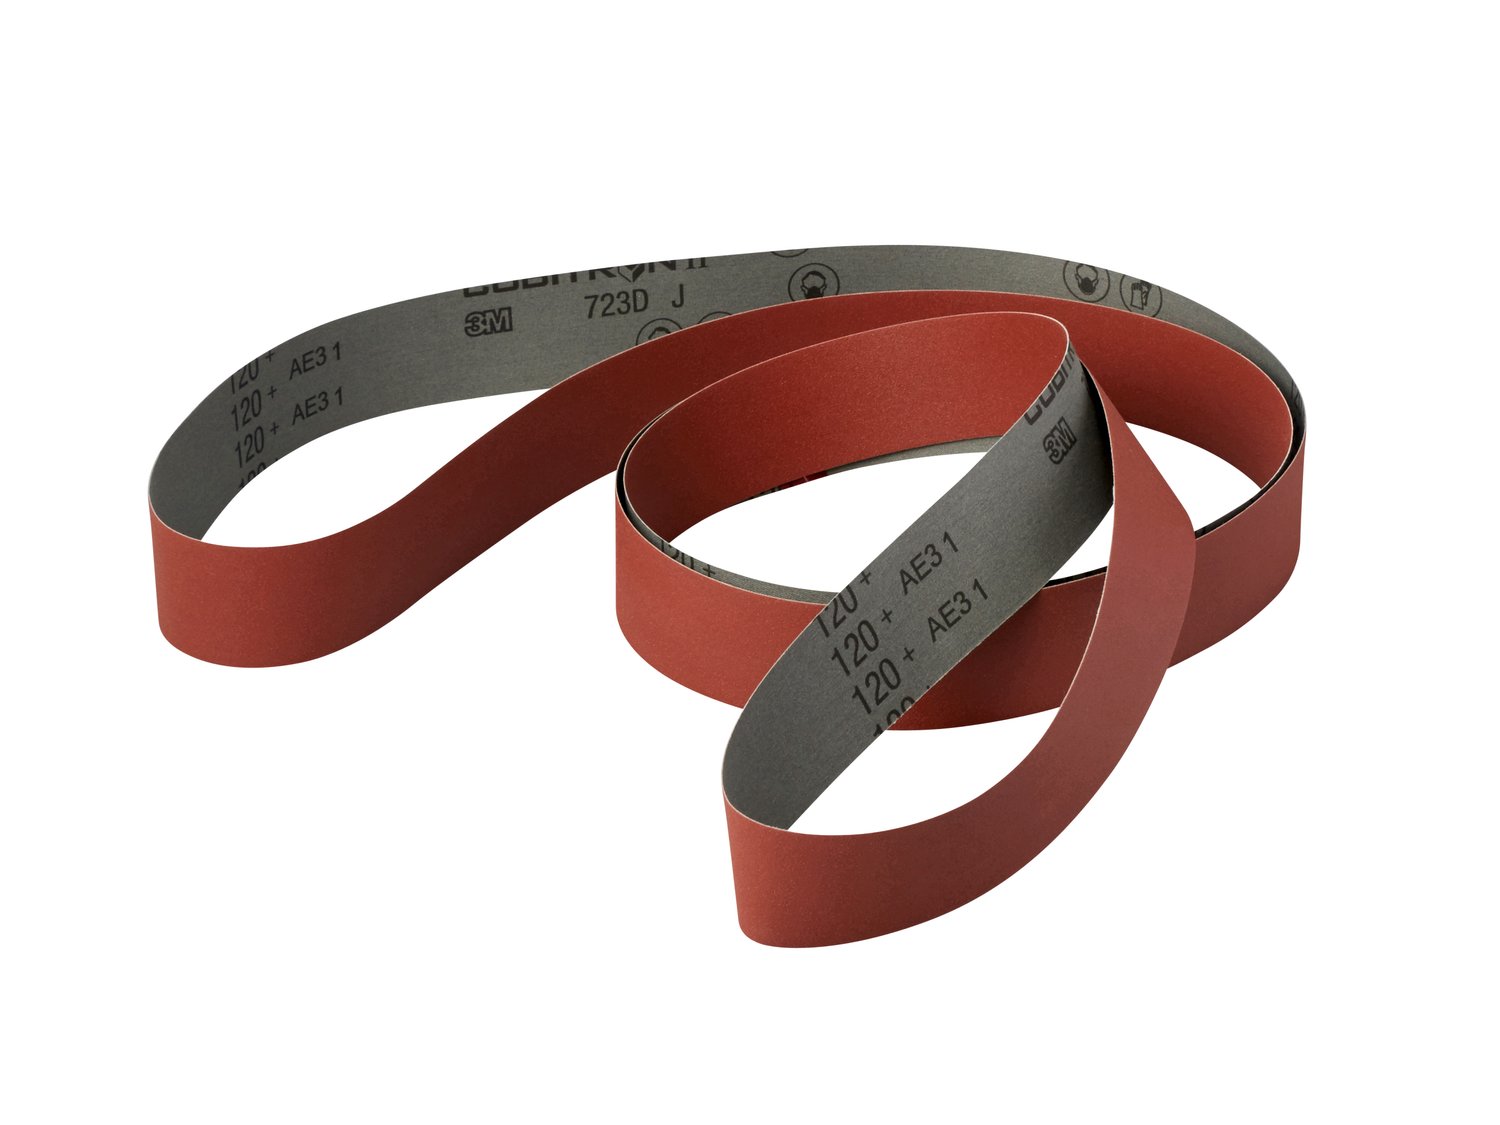 7010512263 - 3M Cubitron ll Cloth Belt 723D, 180+ J-weight, 2 in x 118 in,
Film-lok, Full-flex